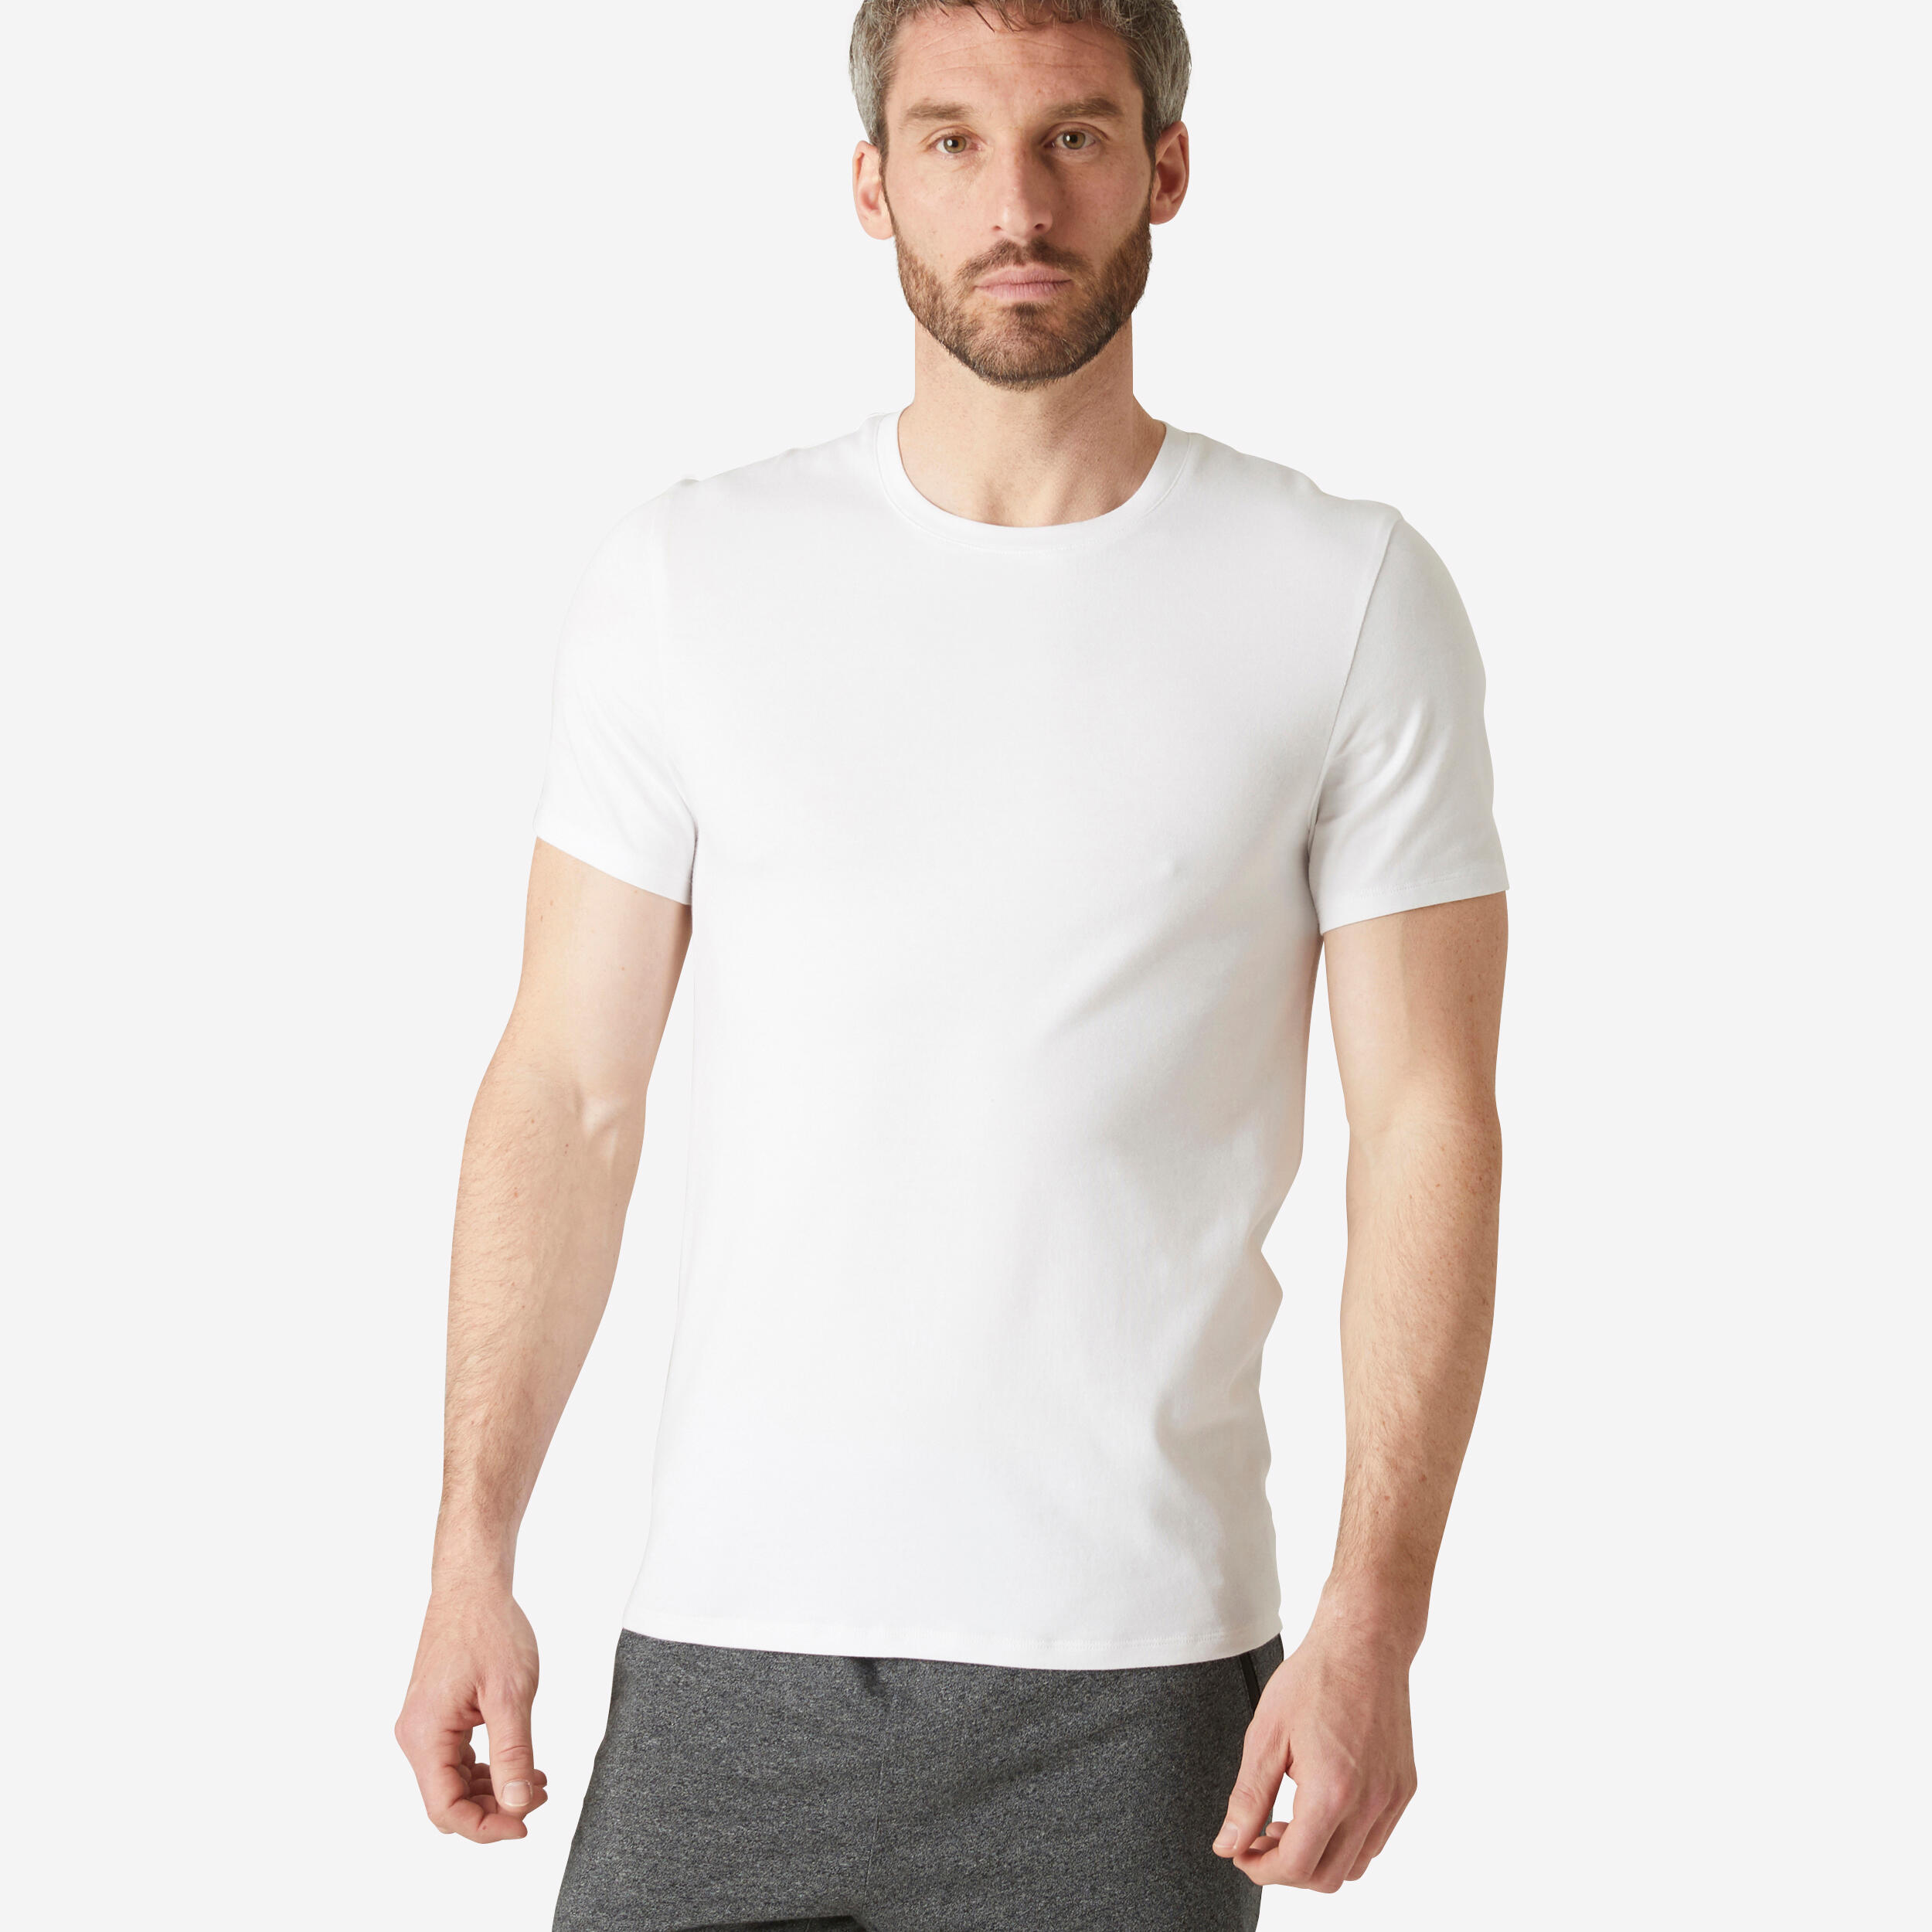 Men's Slim Fit Cotton Fitness T-Shirt - White